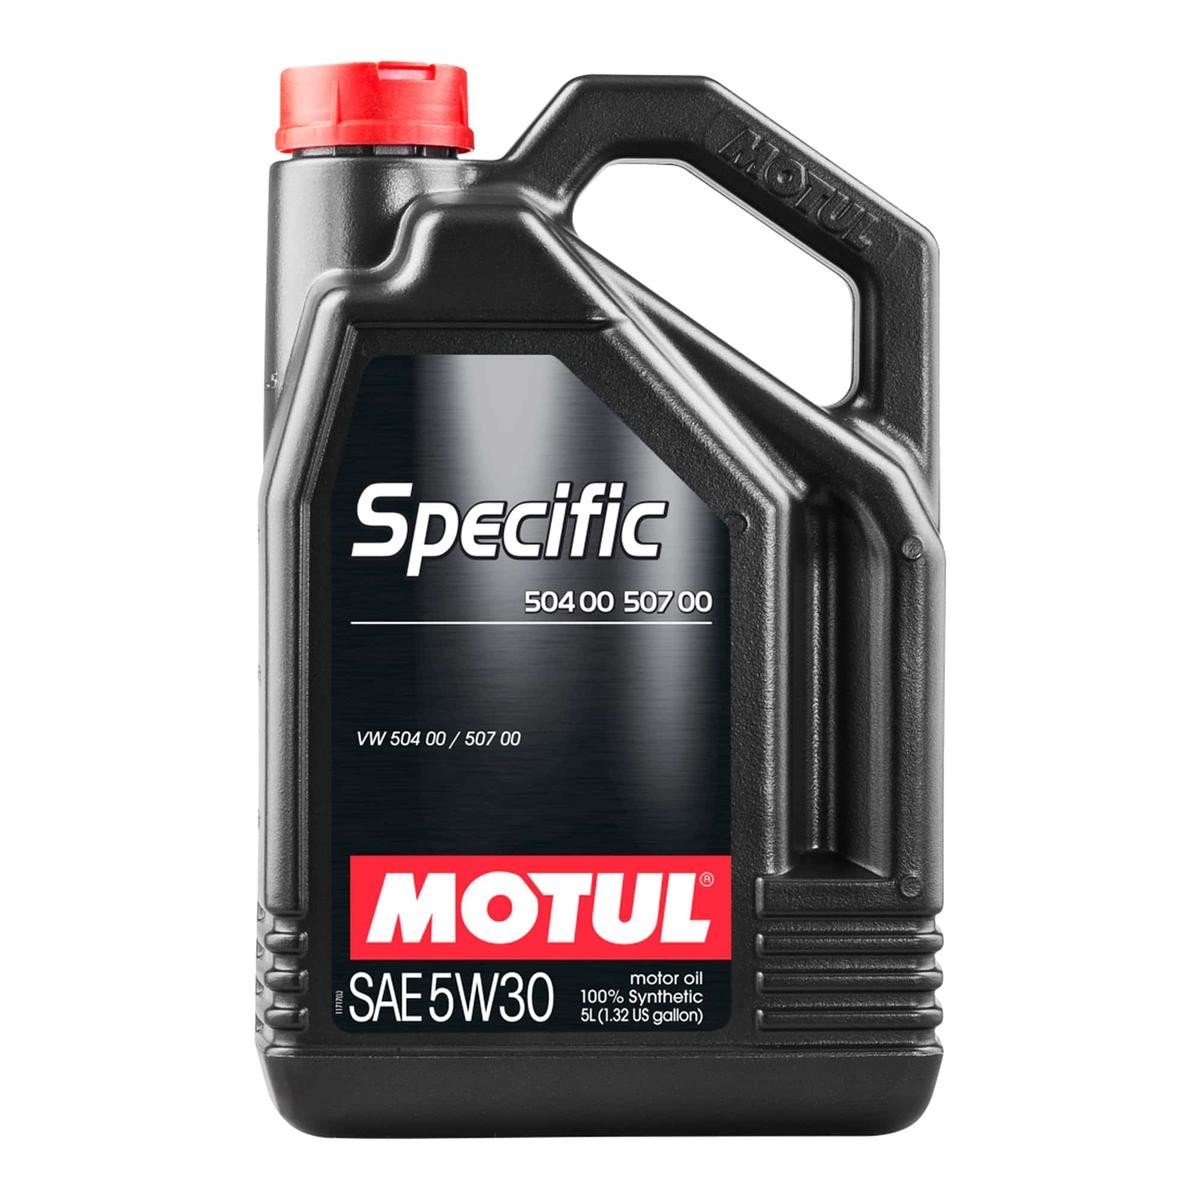 Kaufen Motoröl MOTUL 106375 SPECIFIC, 504 00 507 00 5W-30, 5l